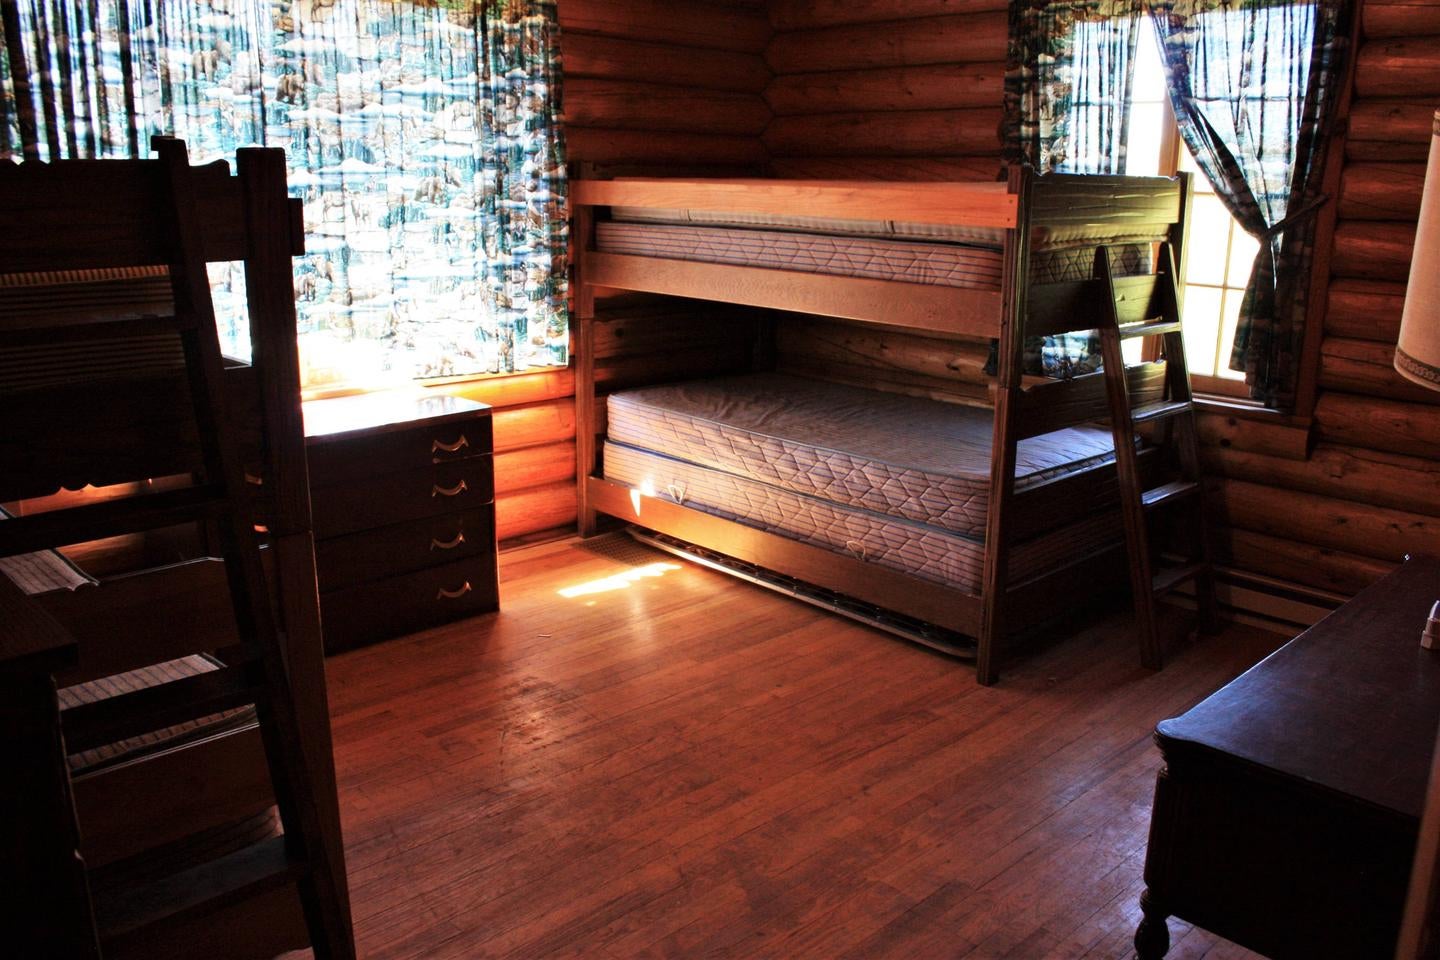 Keystone Ranger Station bedroom



Credit: Alyssa Wesner - USDA Forest Service